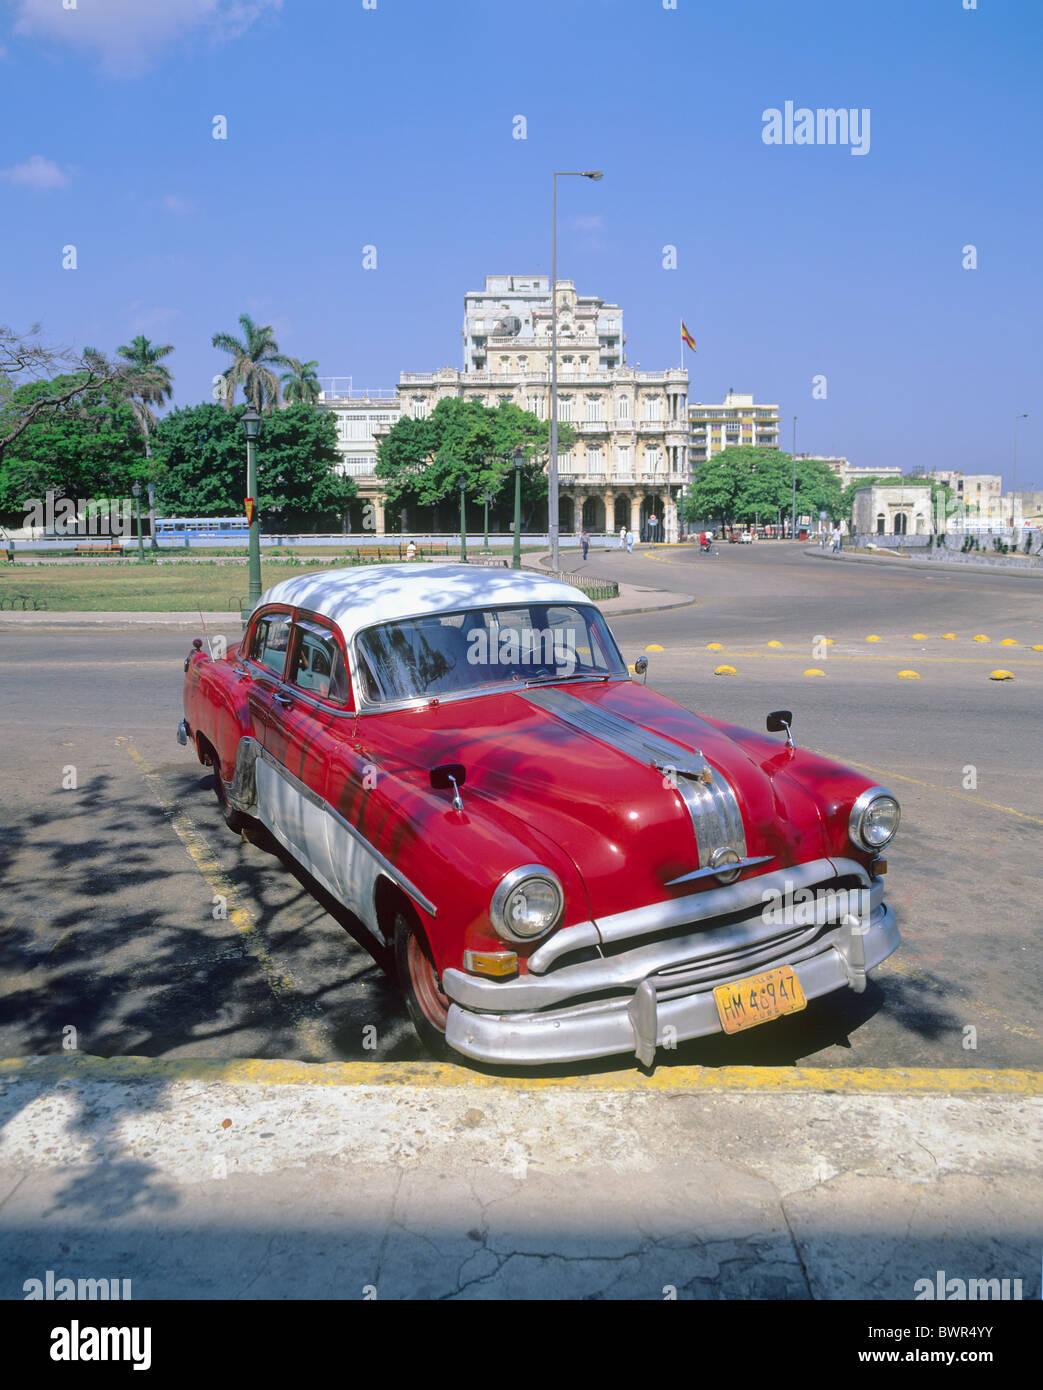 Cuba Habana city American car America Caraibi città Habana vintage automobile auto auto red Foto Stock